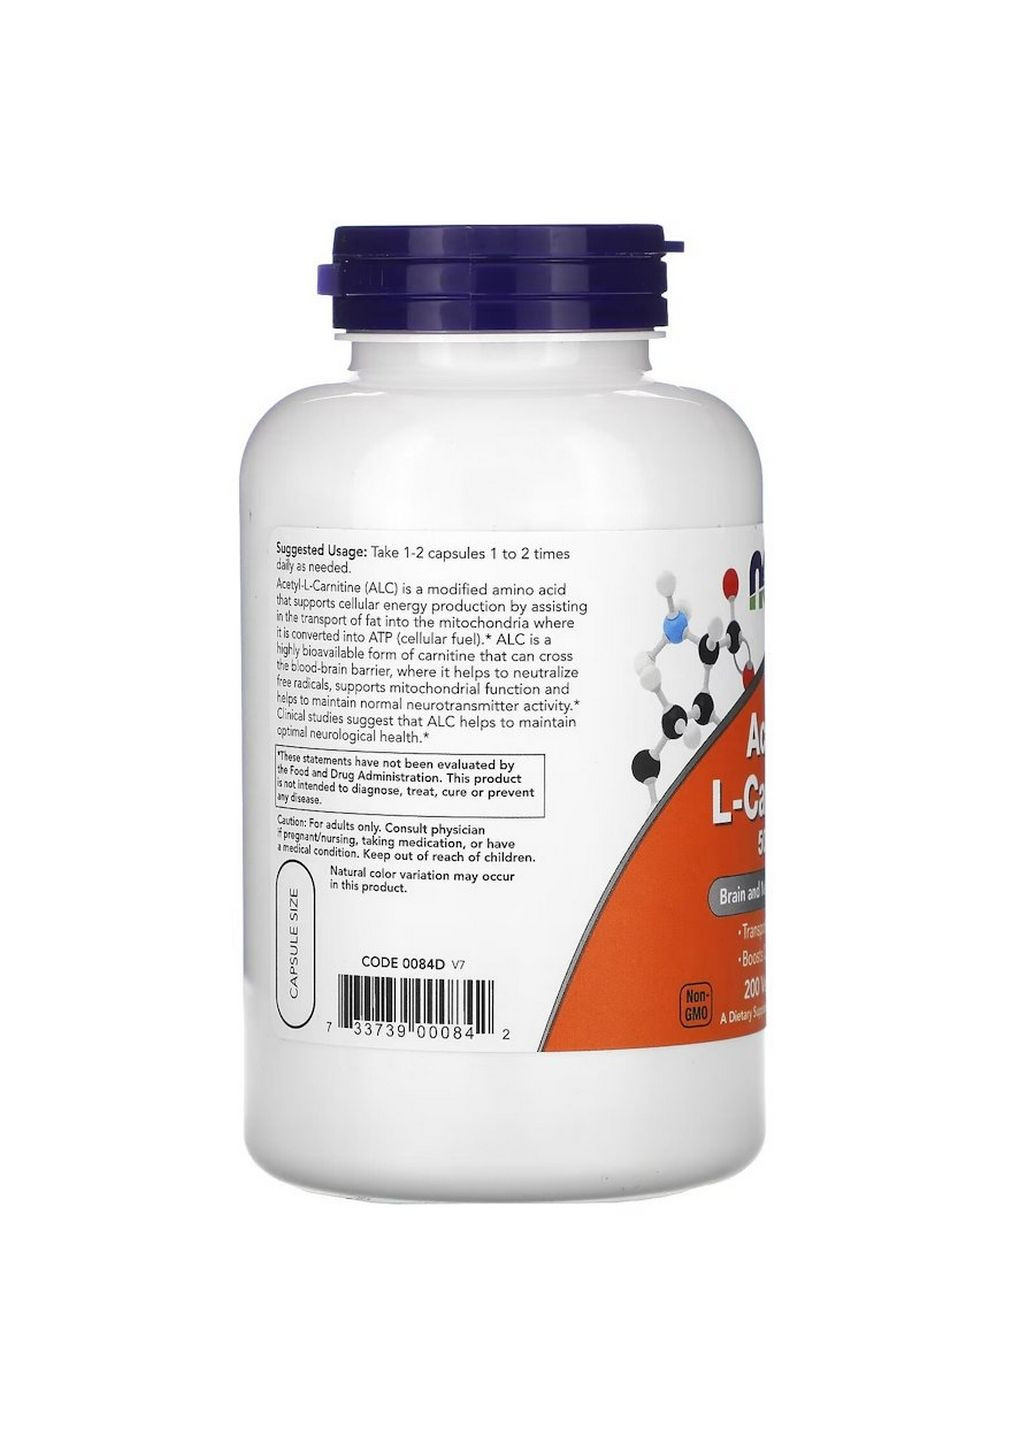 Жиросжигатель Acetyl-L-Carnitine 500 mg, 200 вегакапсул Now (293481965)